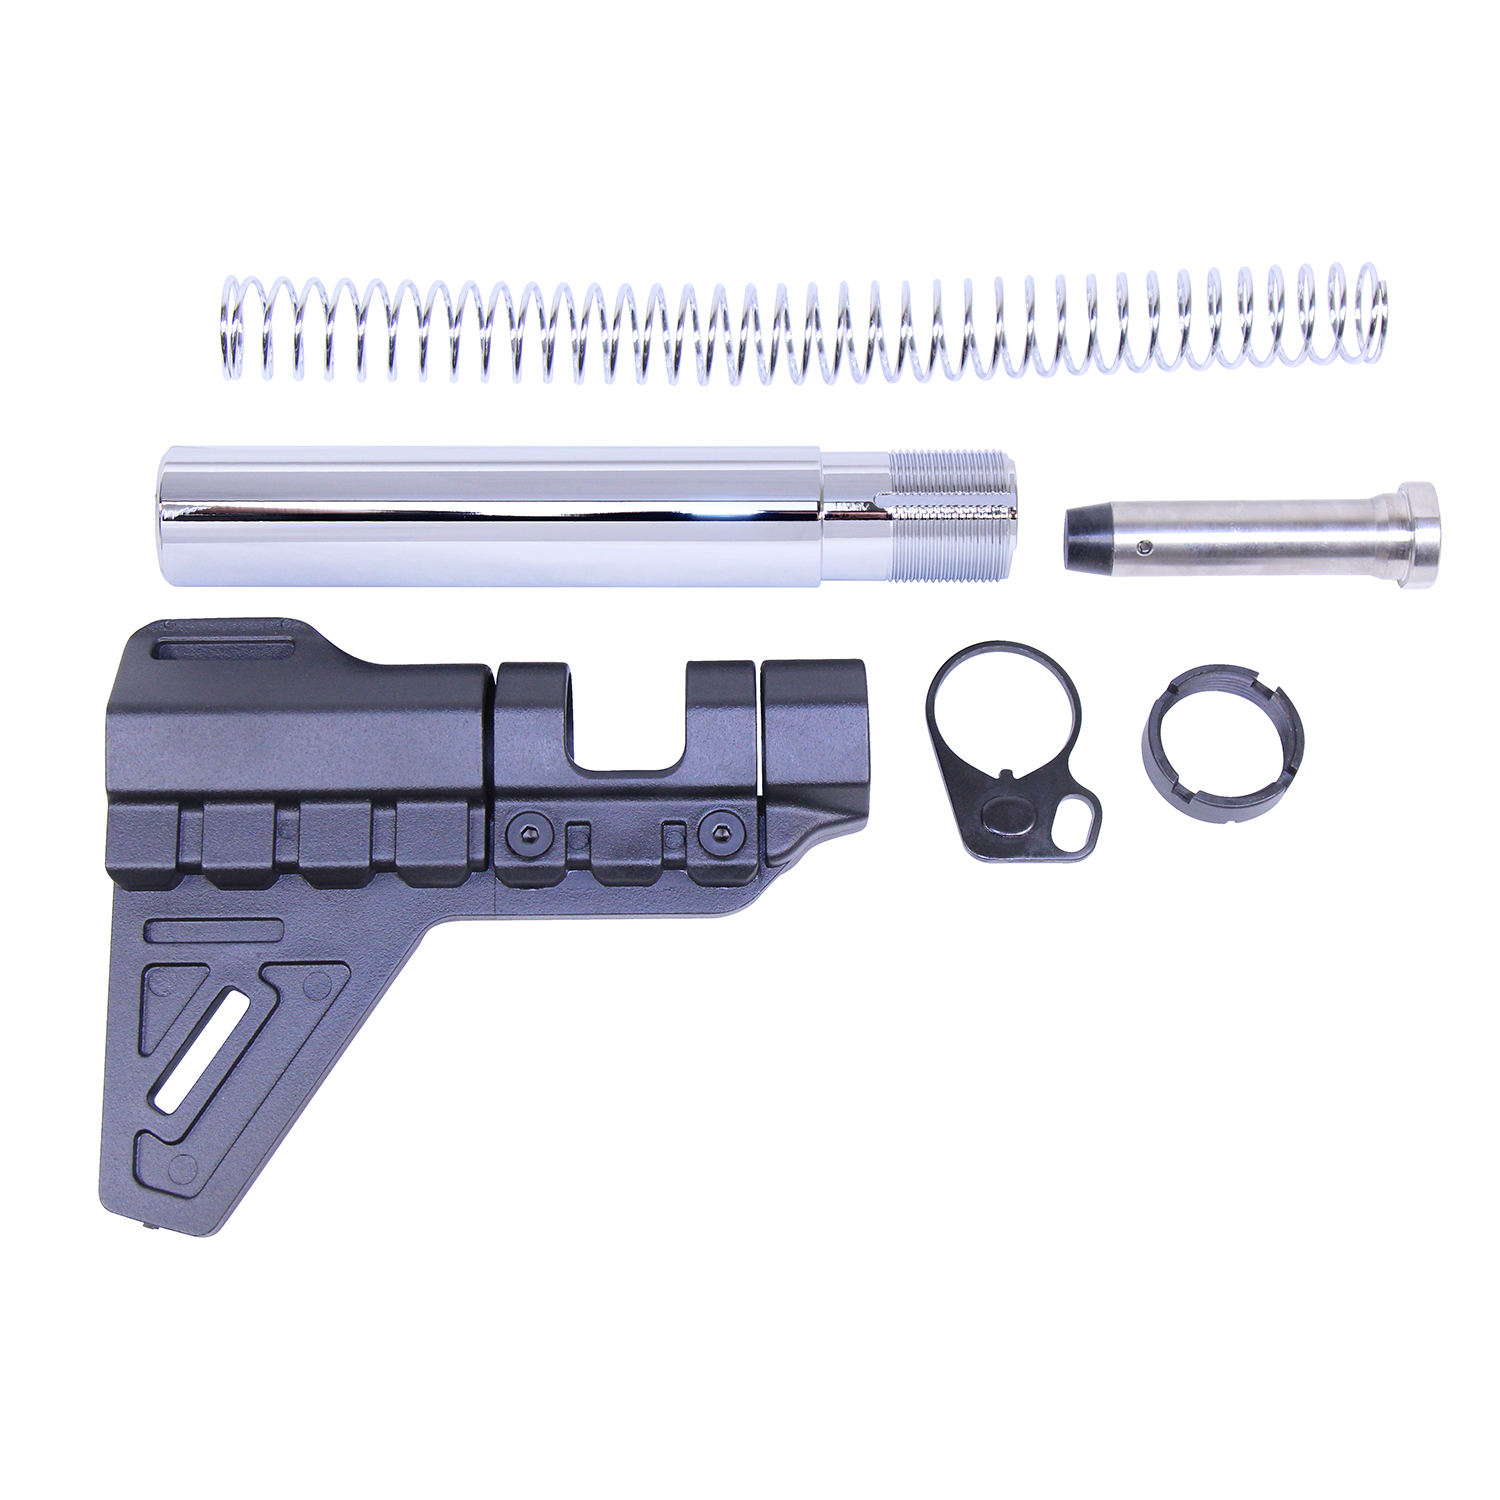 Chrome AR-15 Micro Breach Pistol Brace Kit by Guntec USA.